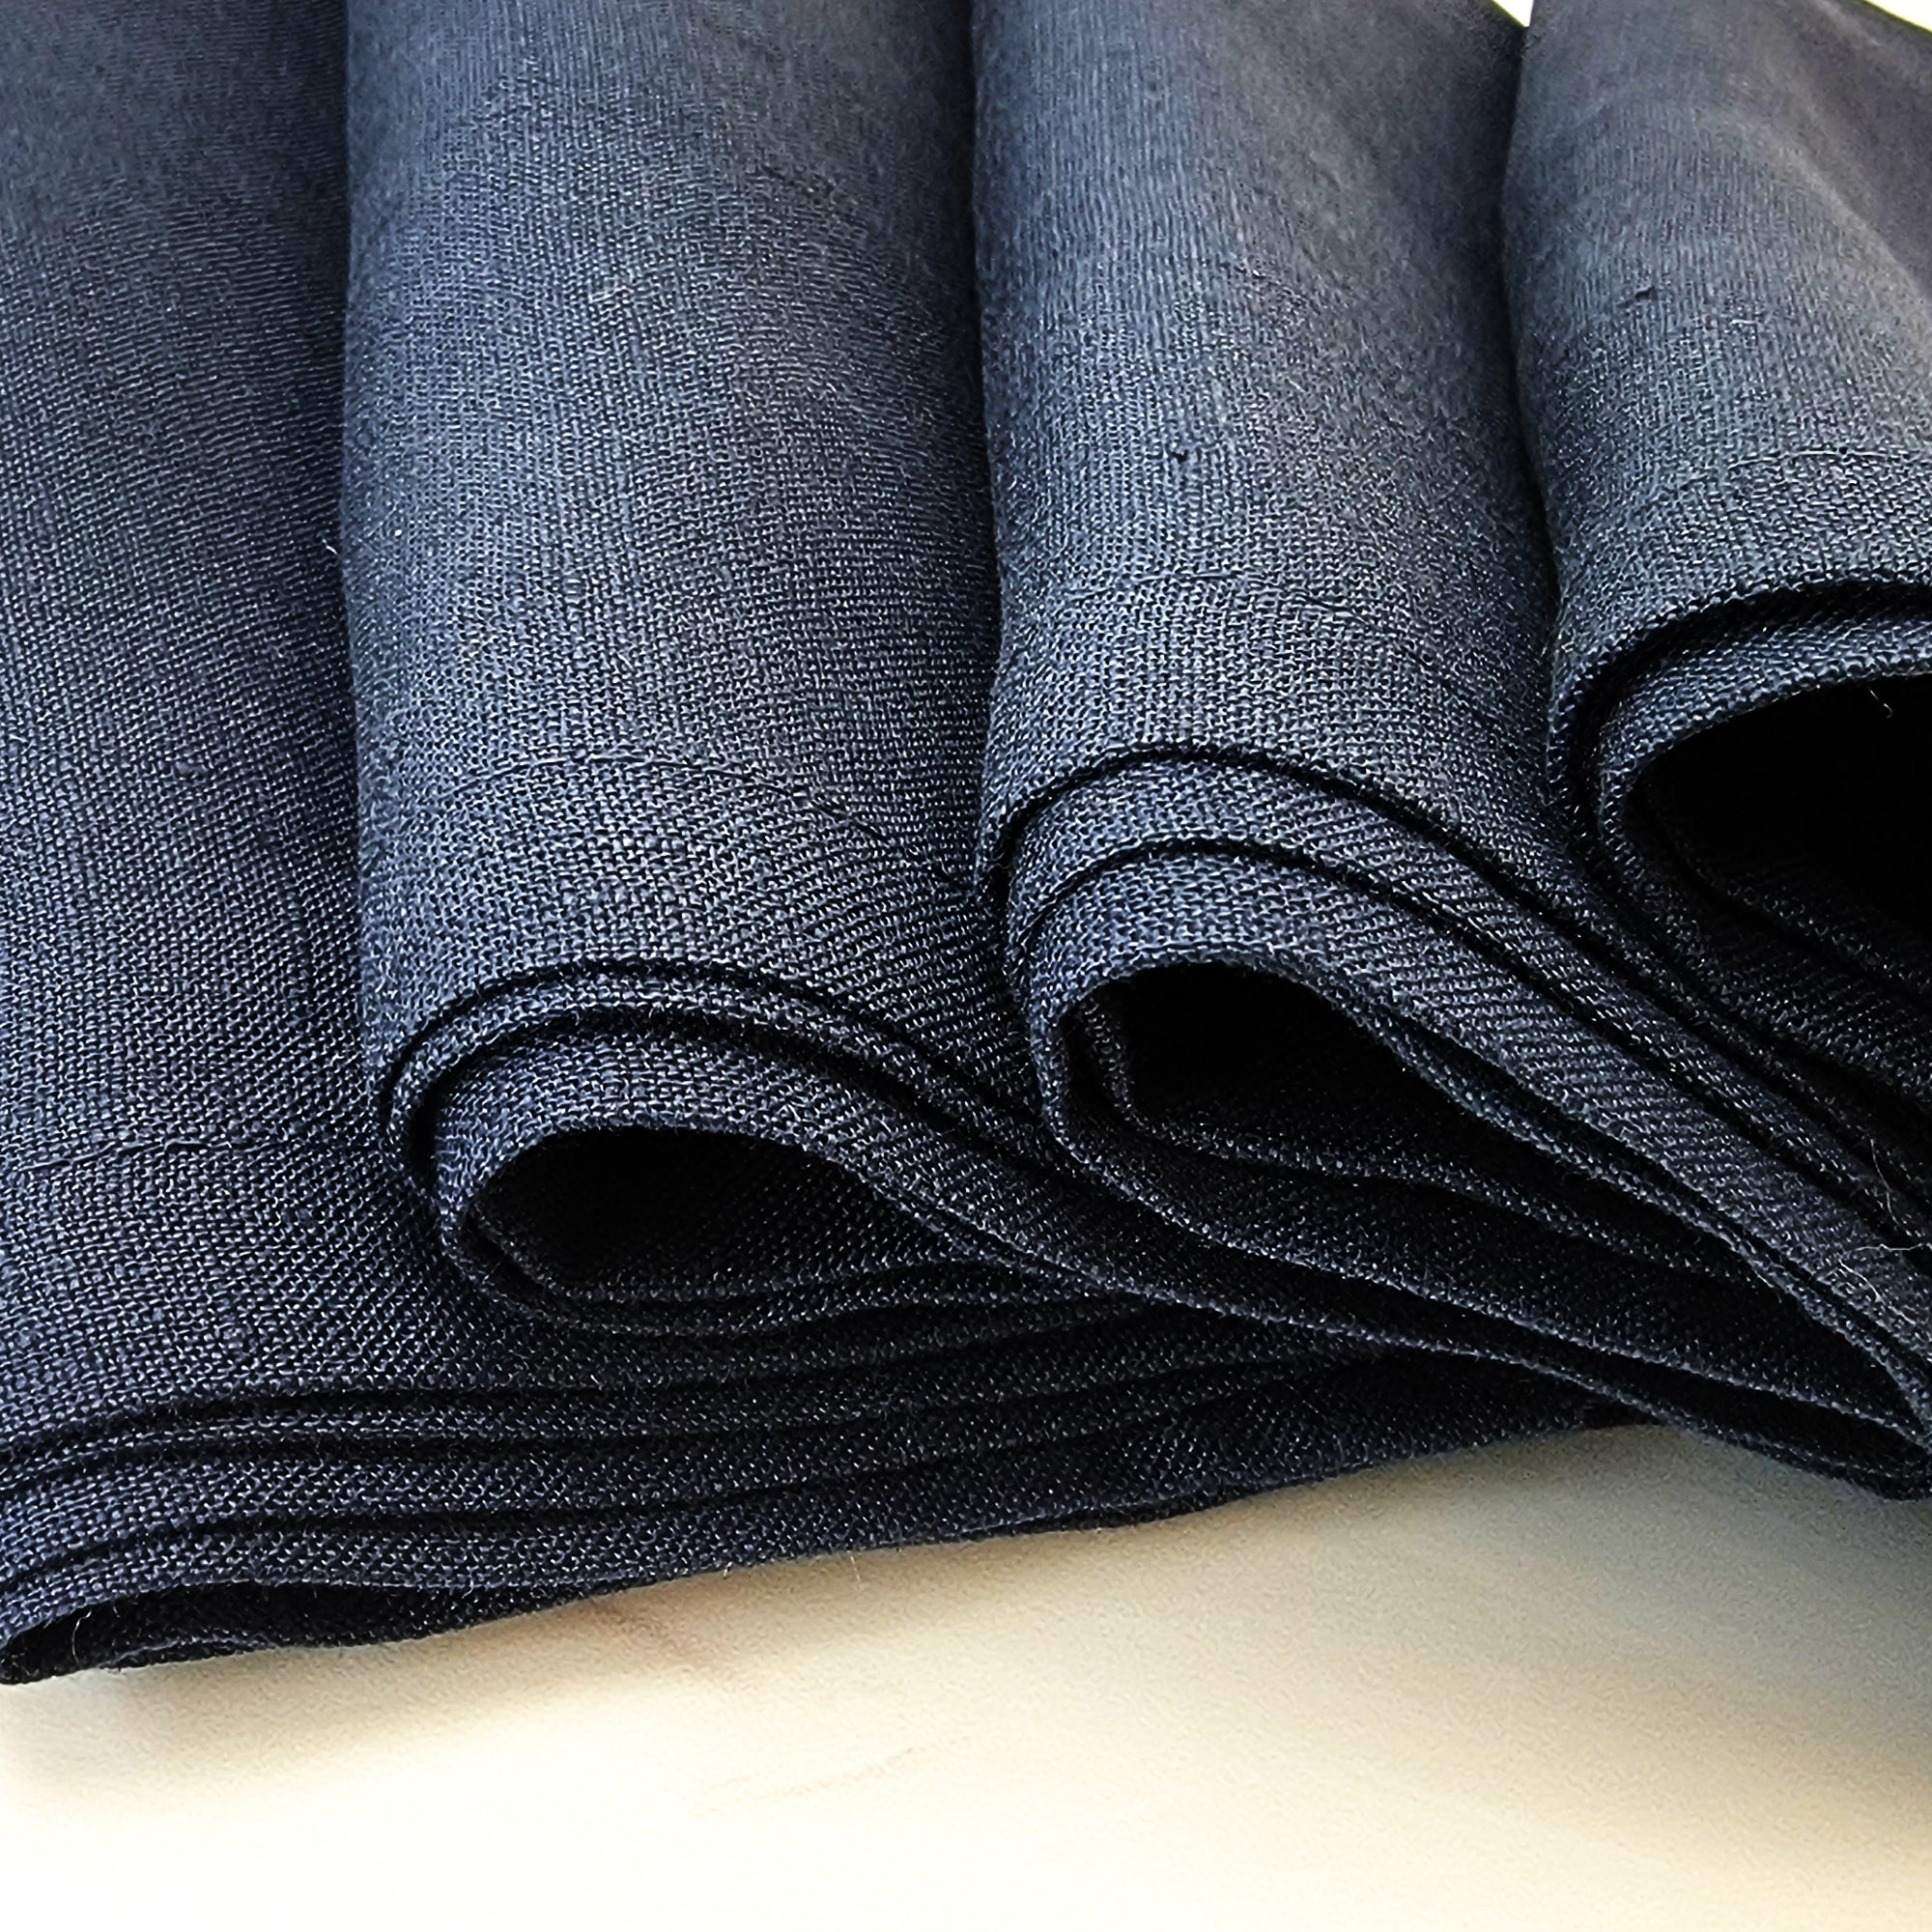 navy blue linen napkins